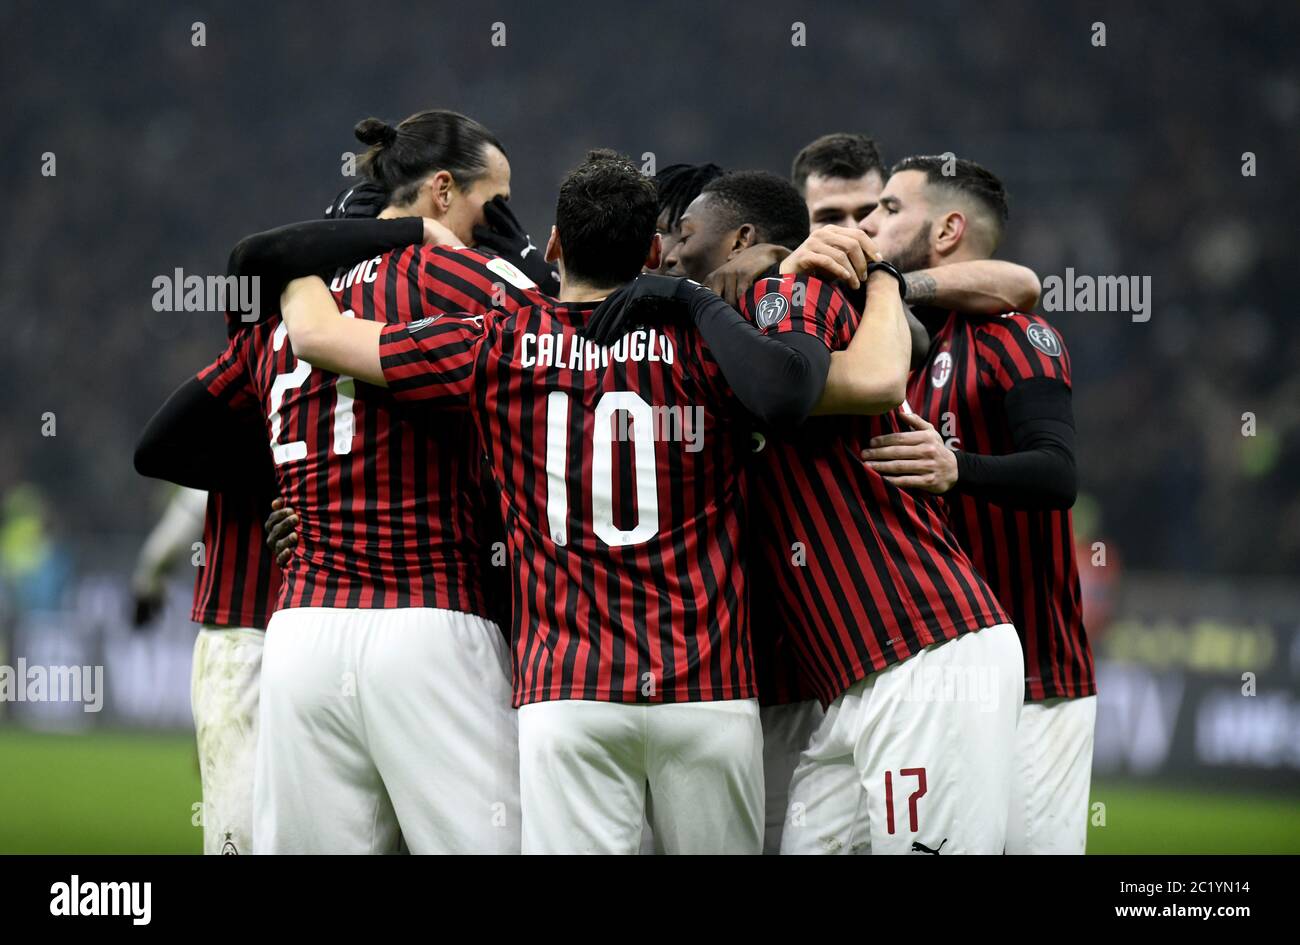 AC Milan soccerac milan team players embrace to celebrate the win goal scored, at the san siro soccer stadium at night, in Milan. Stock Photo